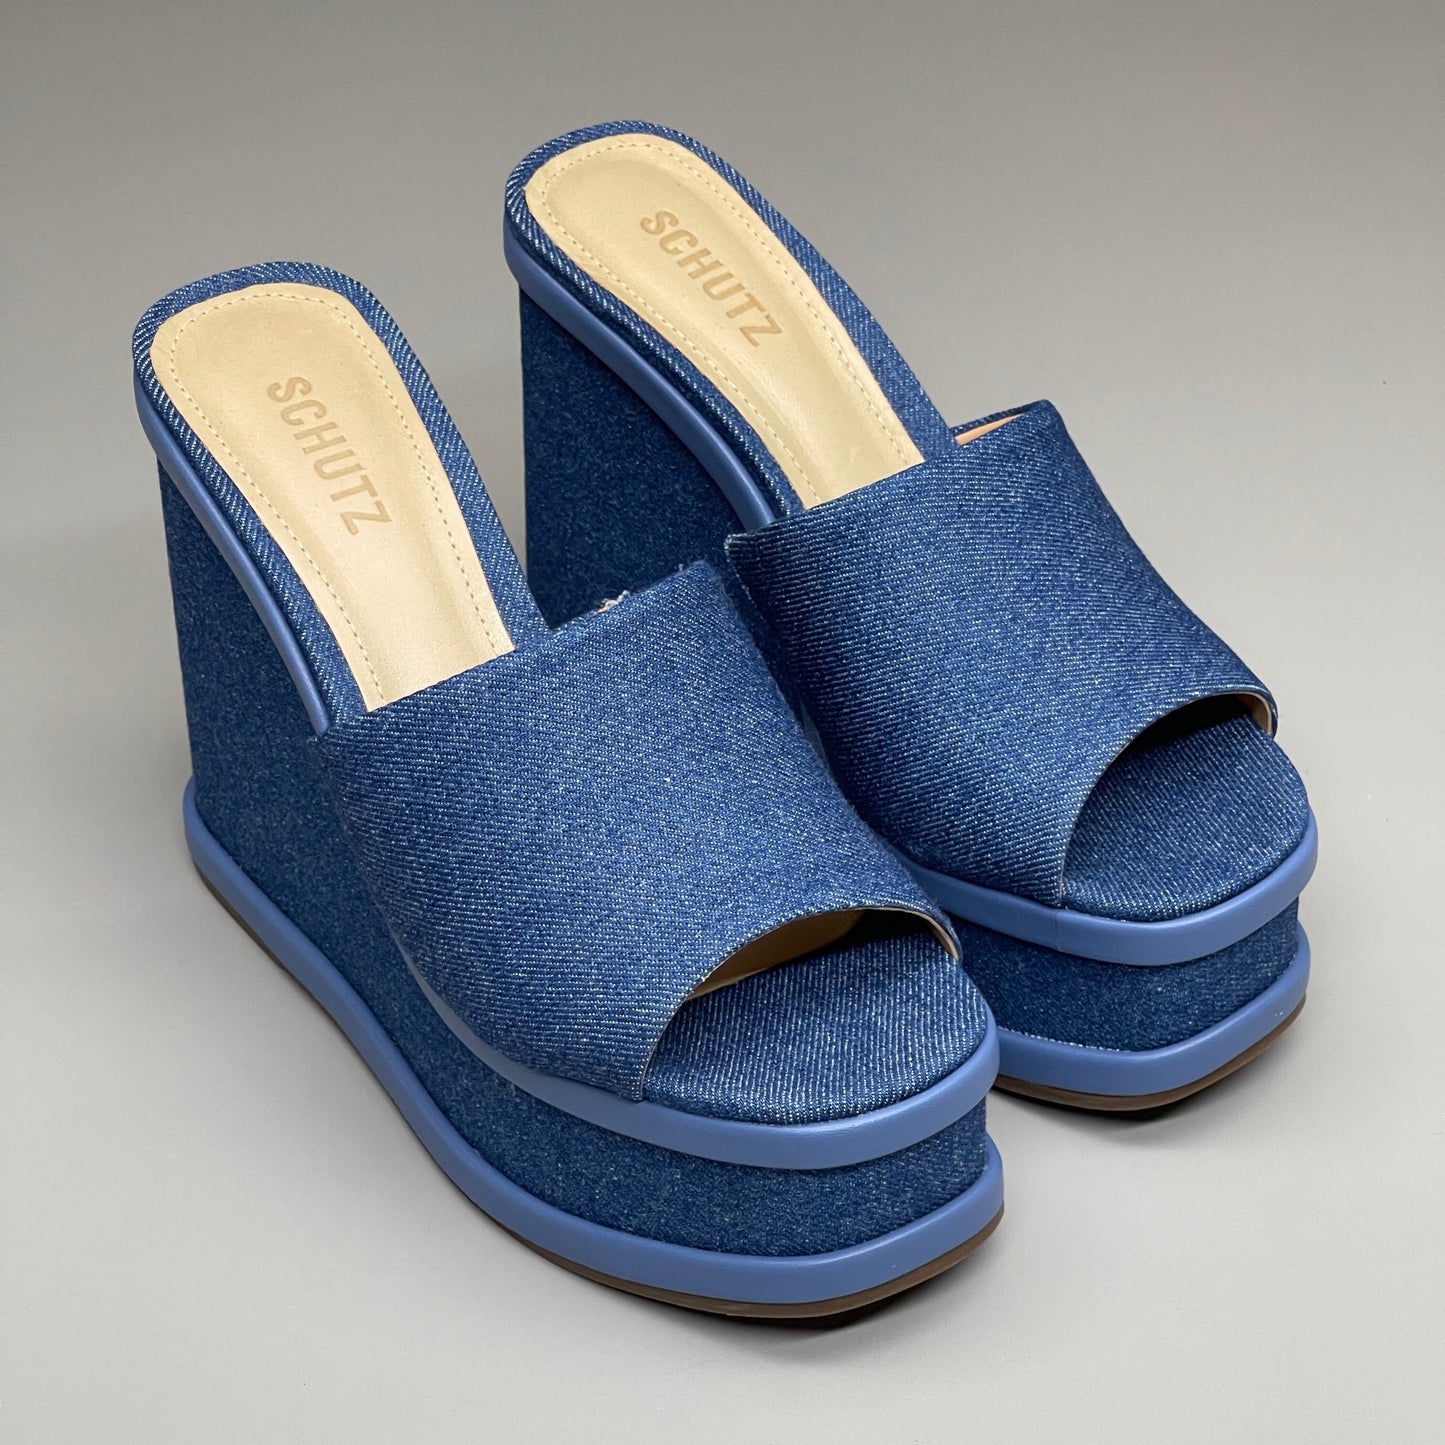 SCHUTZ Dalle Denim Women's Wedge Sandal Blue Platform Shoe Sz 5.5B (New)